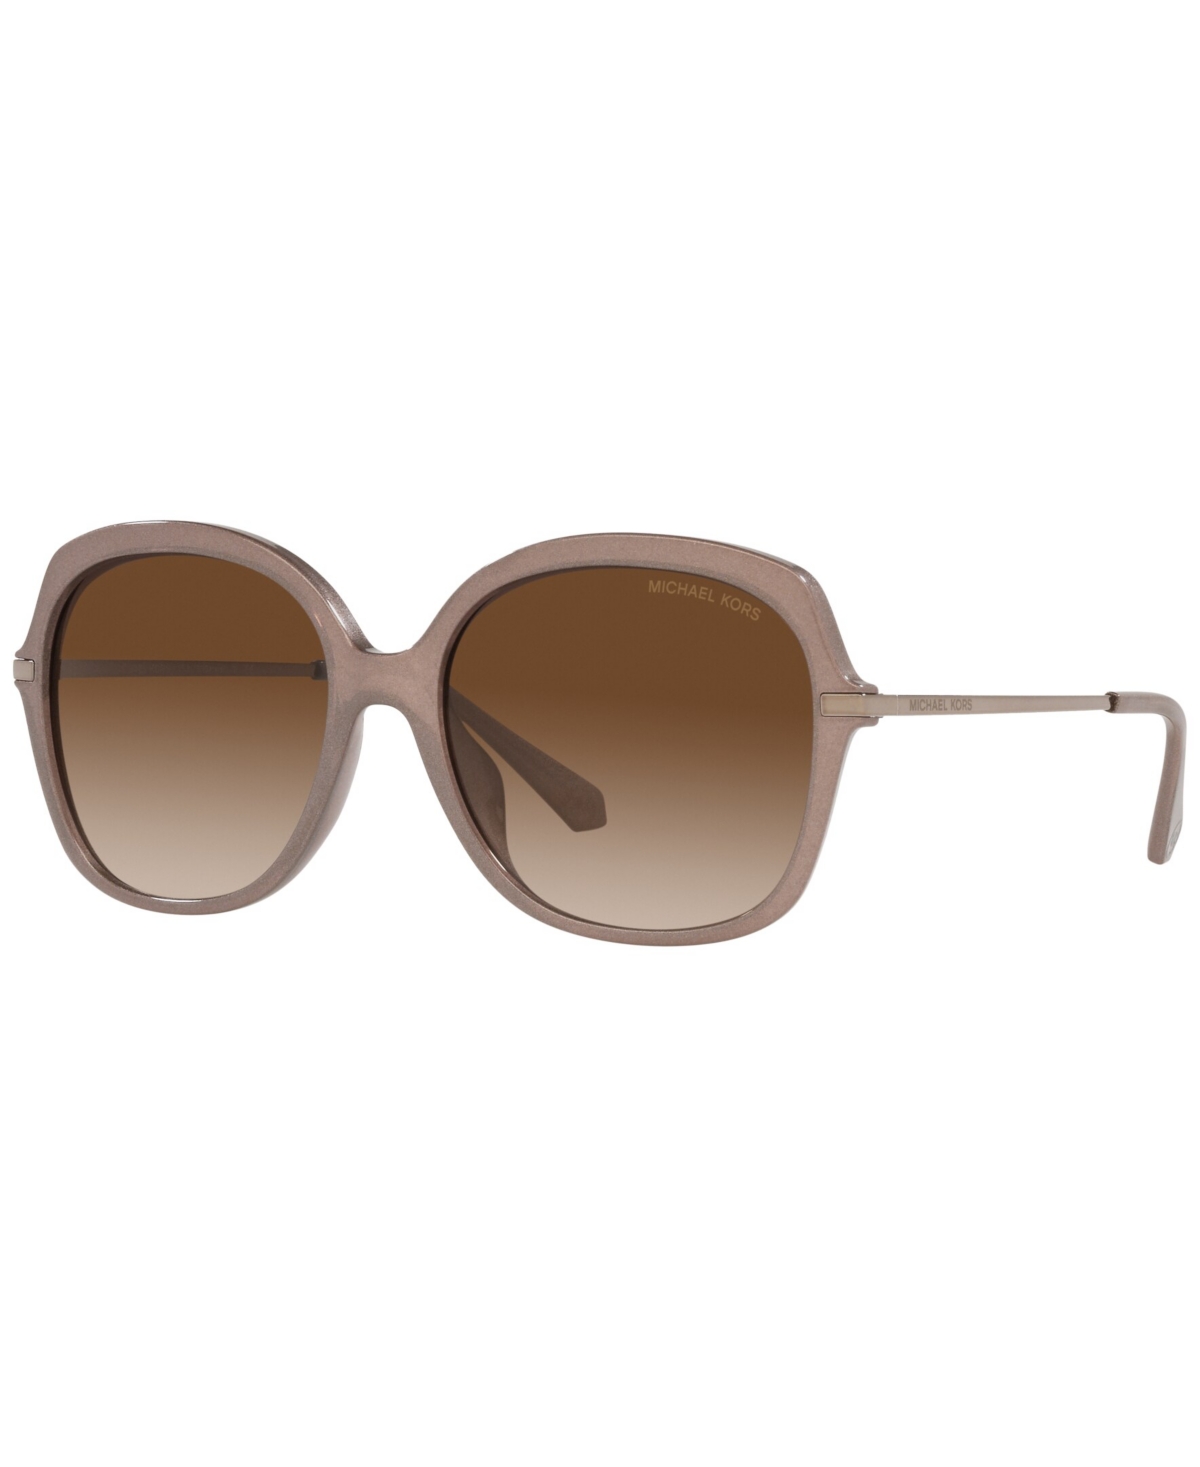 Michael Kors Women's Sunglasses, Mk2149 In Blush Camel Pearlized